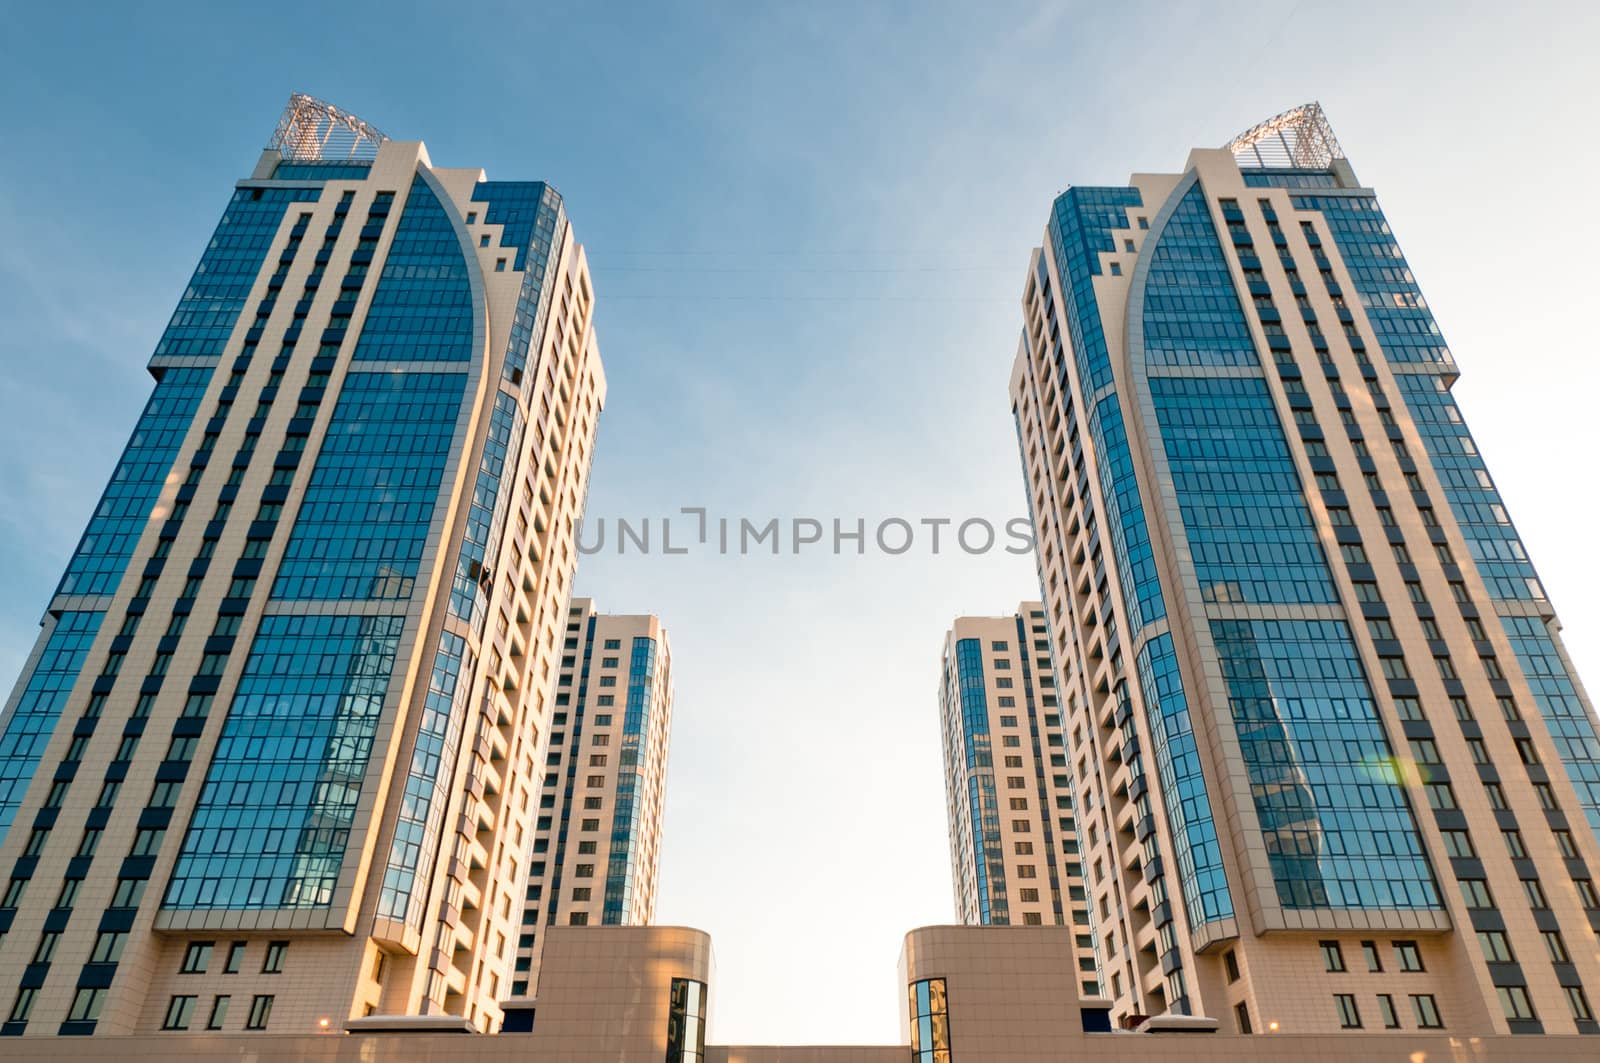 Symmetrical house towers by dmitryelagin